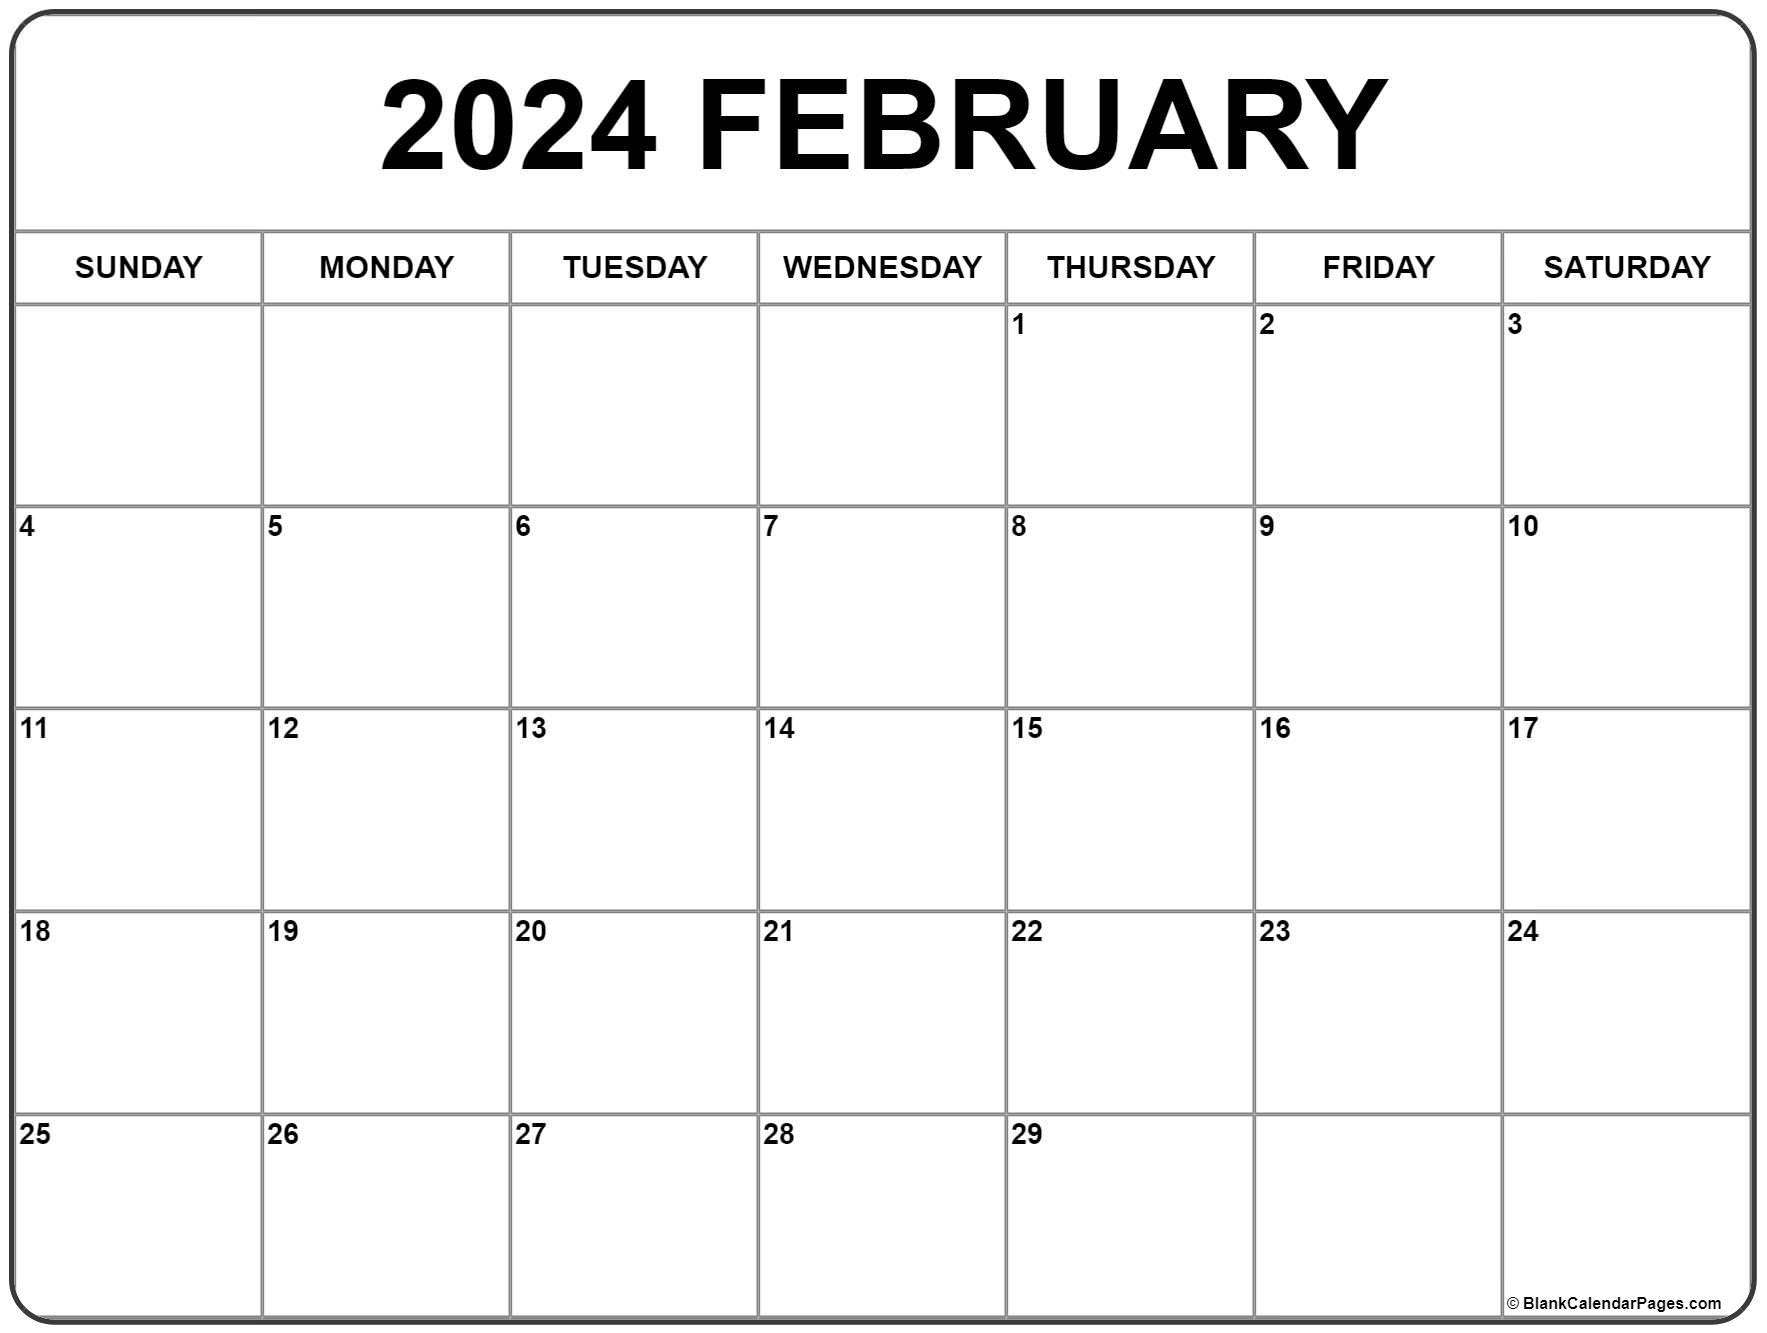 2021 Feb Calendar February 2021 calendar | free printable monthly calendars